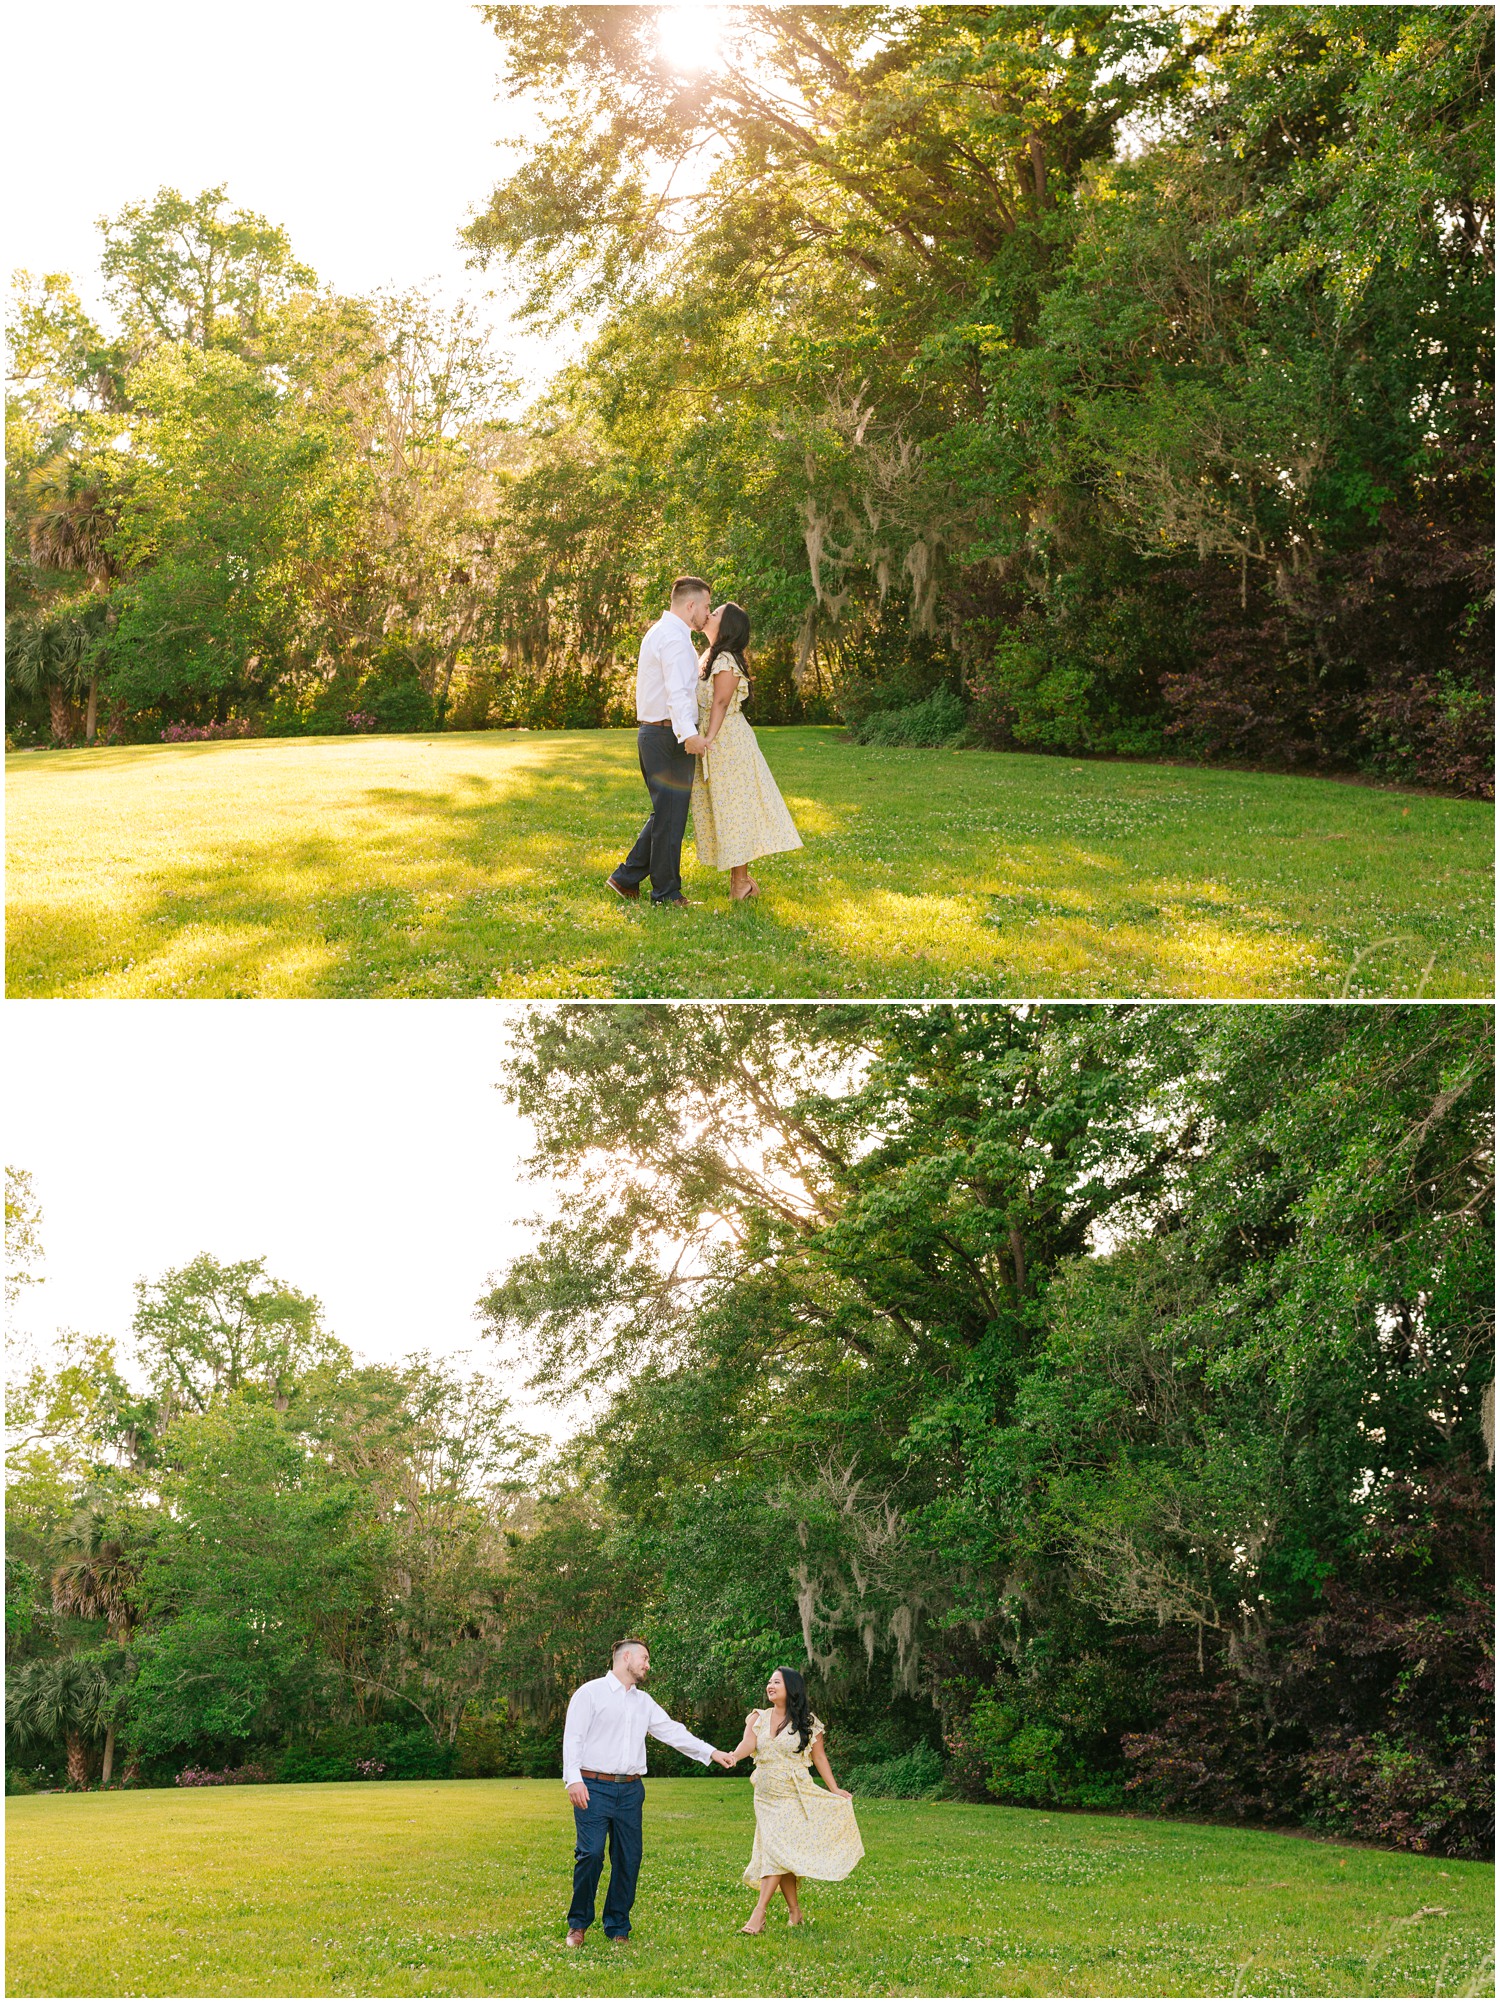 Destination-Wedding-Photographer_Magnolia-Plantation-Engagement-Session_Jess-and-Justin_Charleston-South-Carolina_0007.jpg